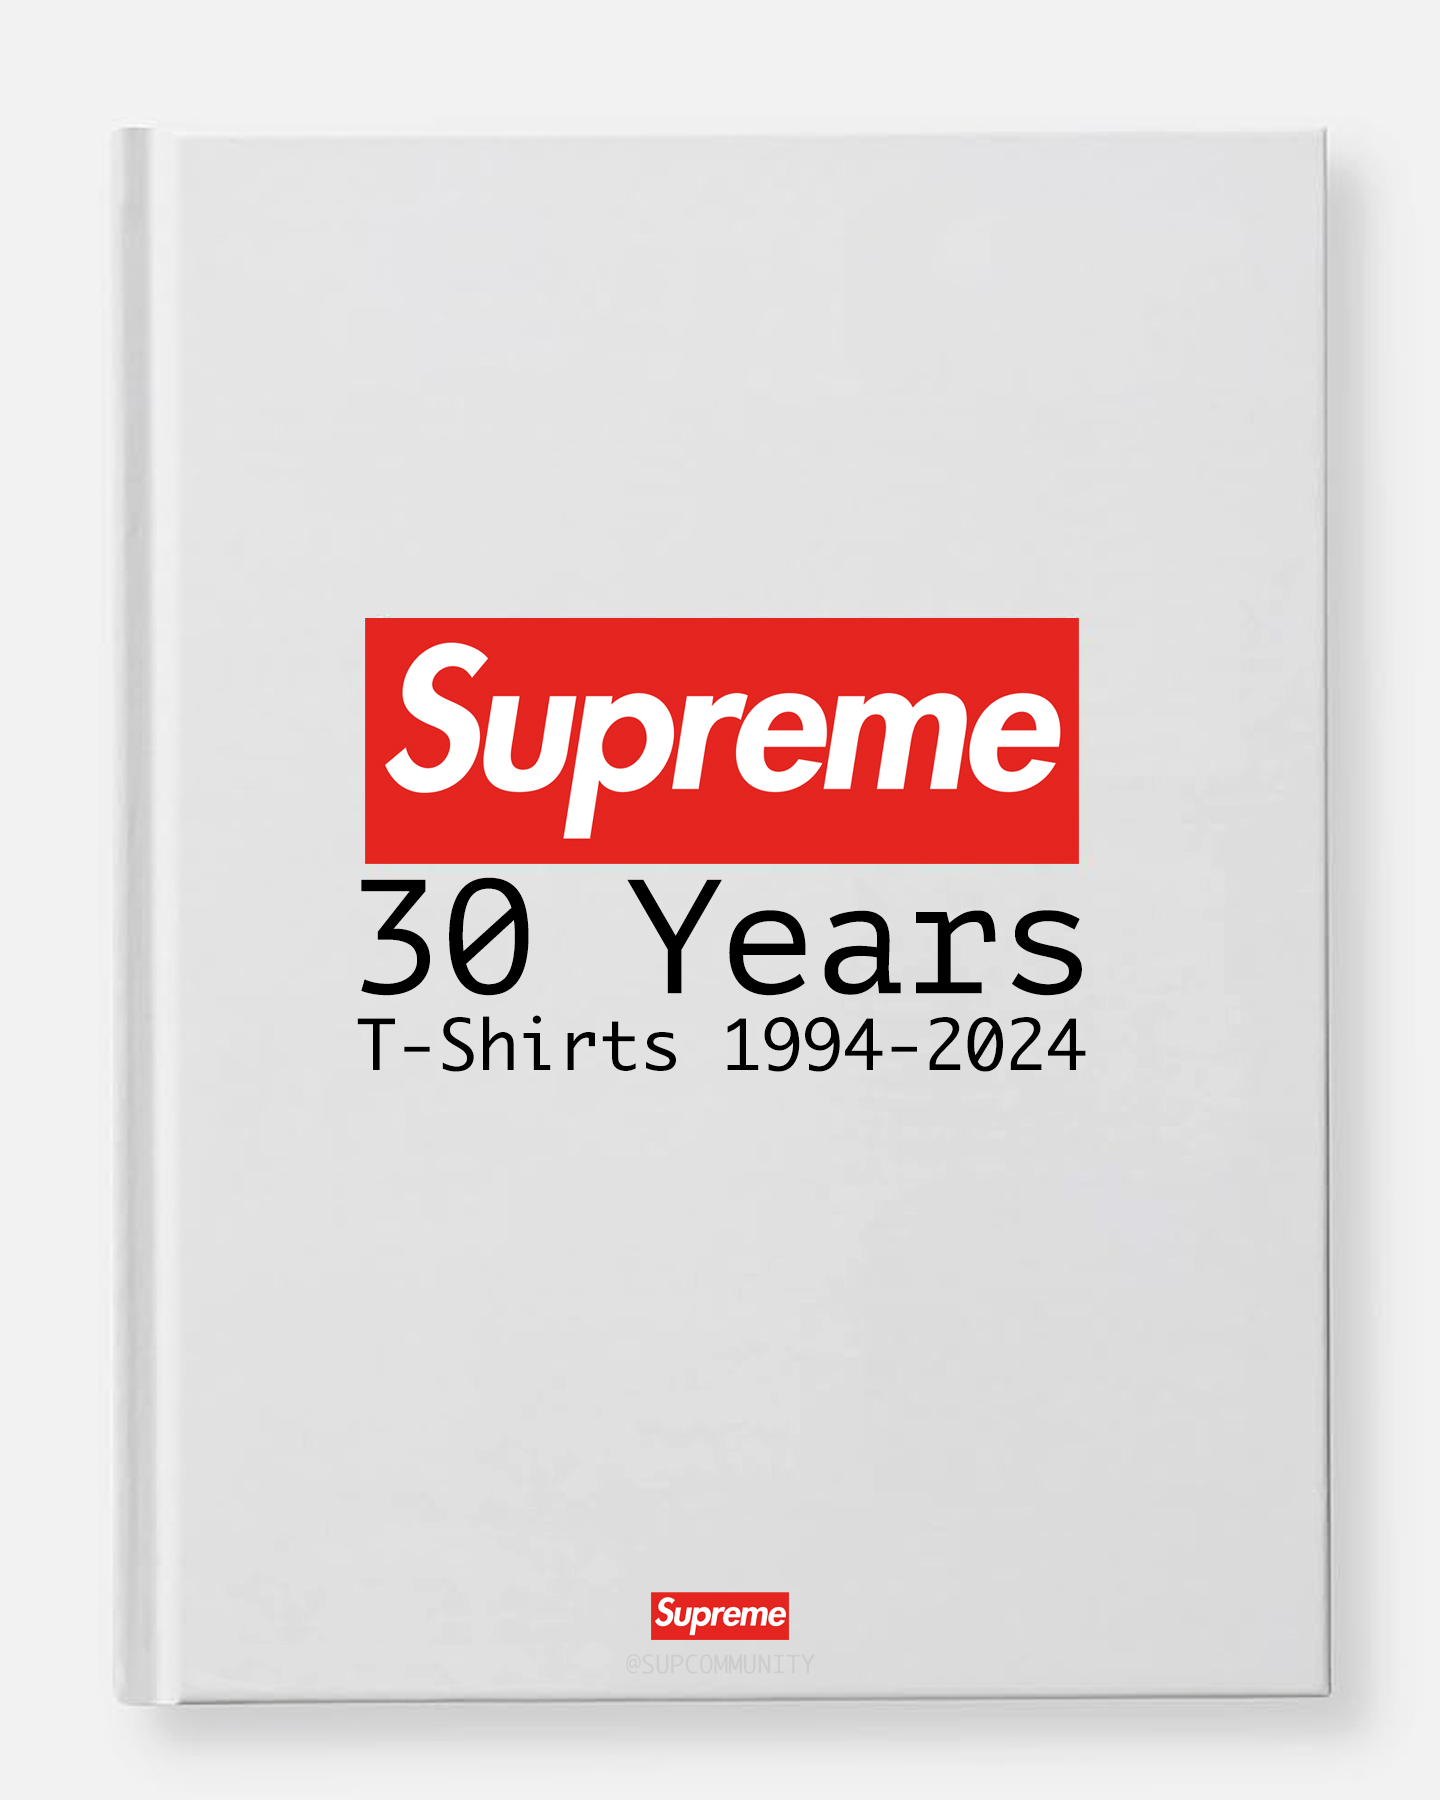 30 Years of Supreme: The Iconic Brand's Latest Triumph - Supreme